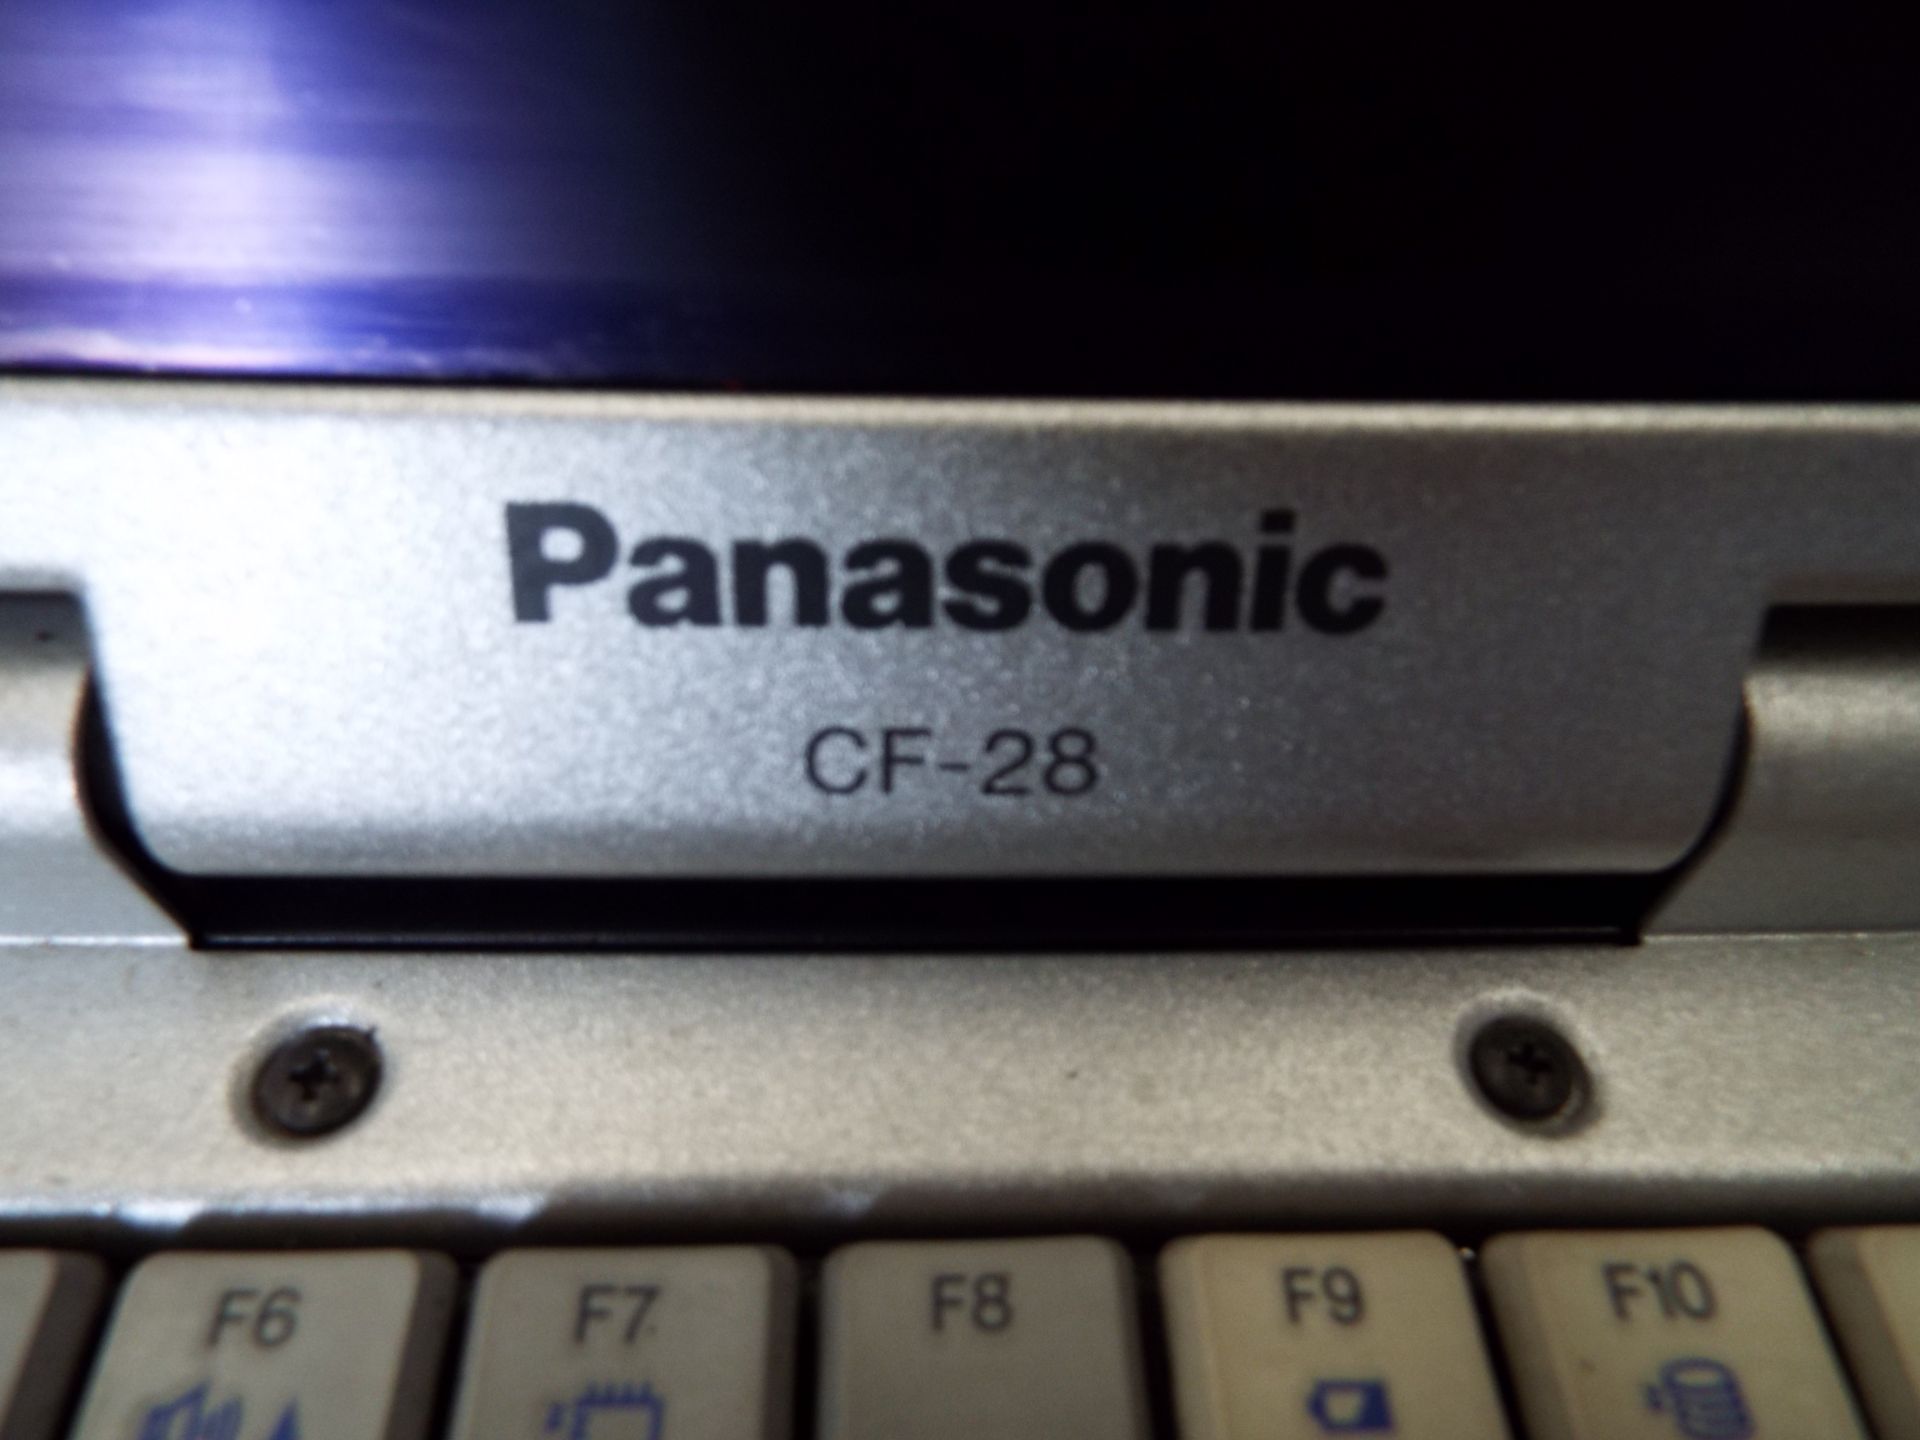 Panasonic CF-28 Toughbook Laptop - Image 4 of 10